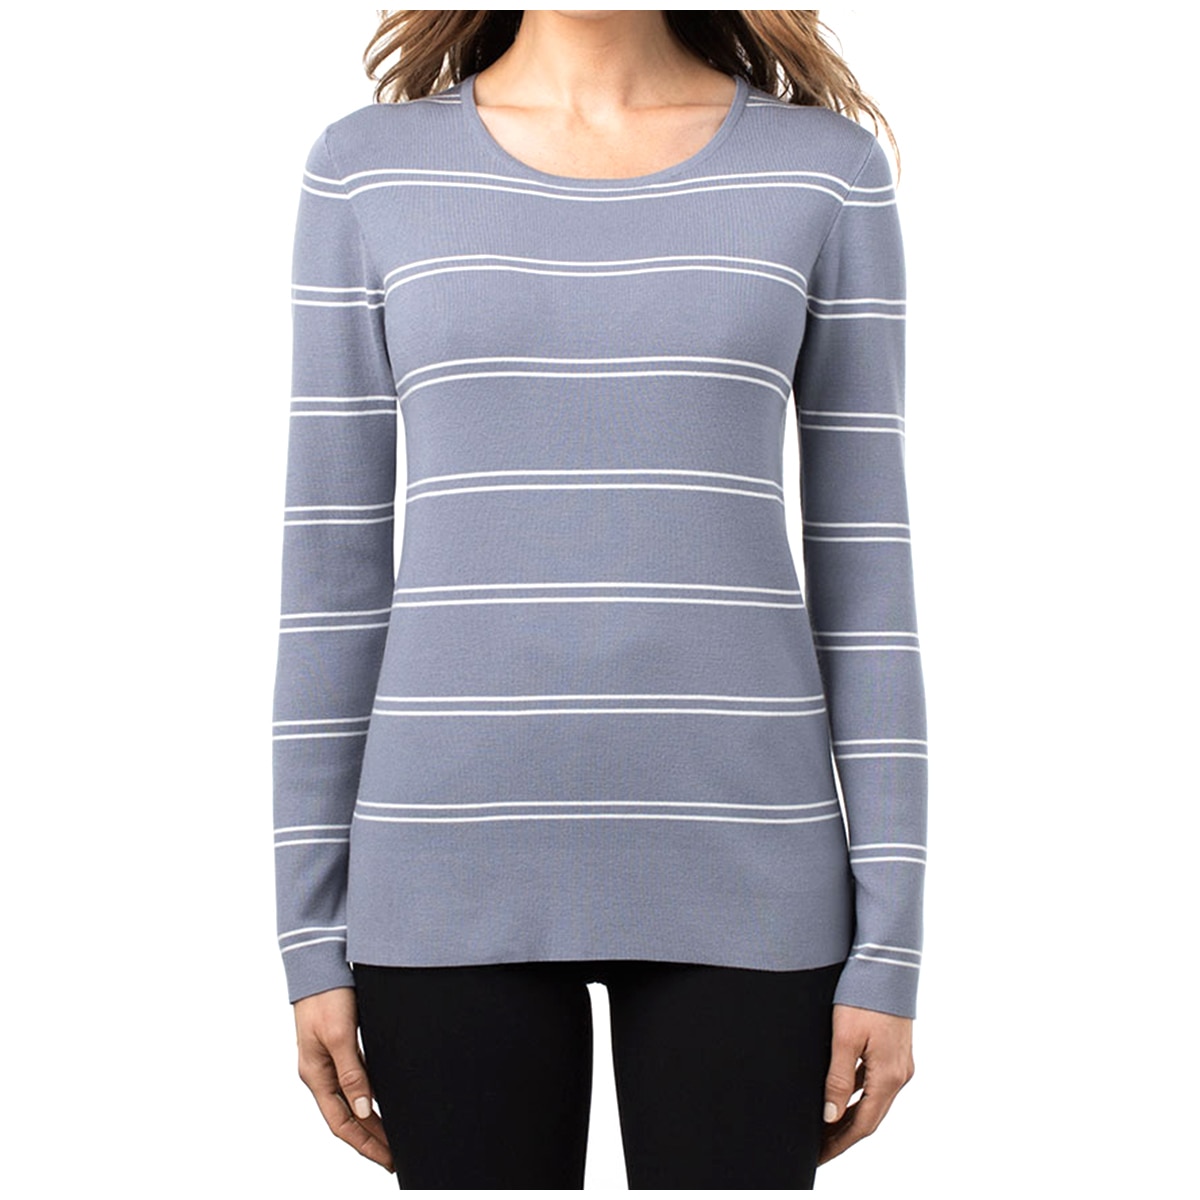 Kirkland Signature Ladies' Crewneck Sweater - Charcoal/Ivrory Stripe